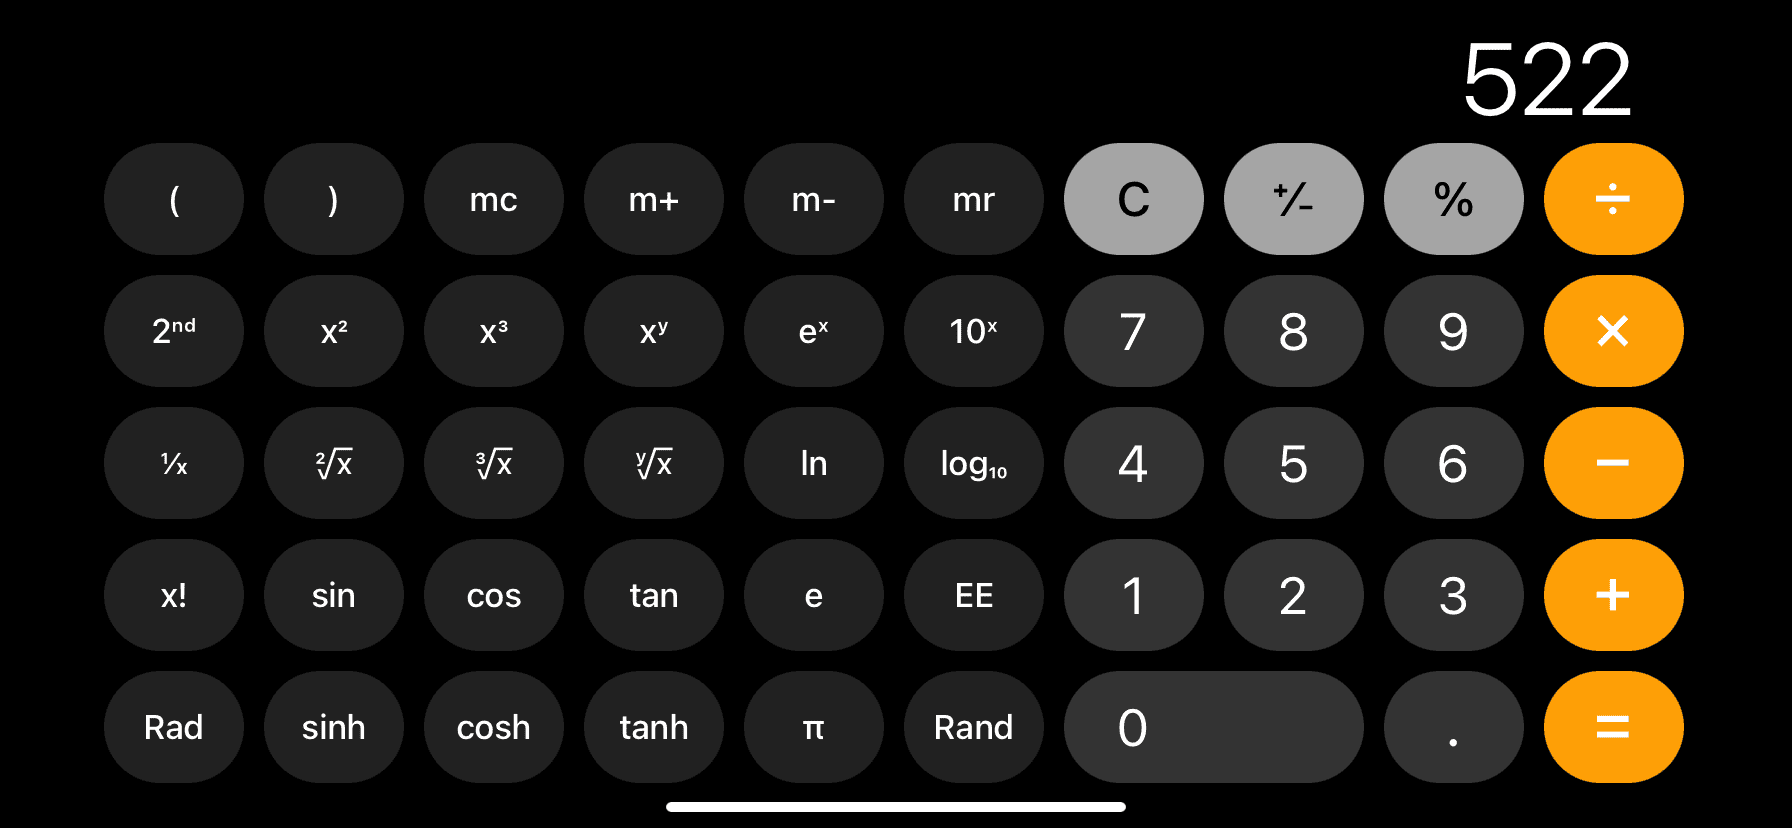 Scientific calculator on iPhone in landscape orientation